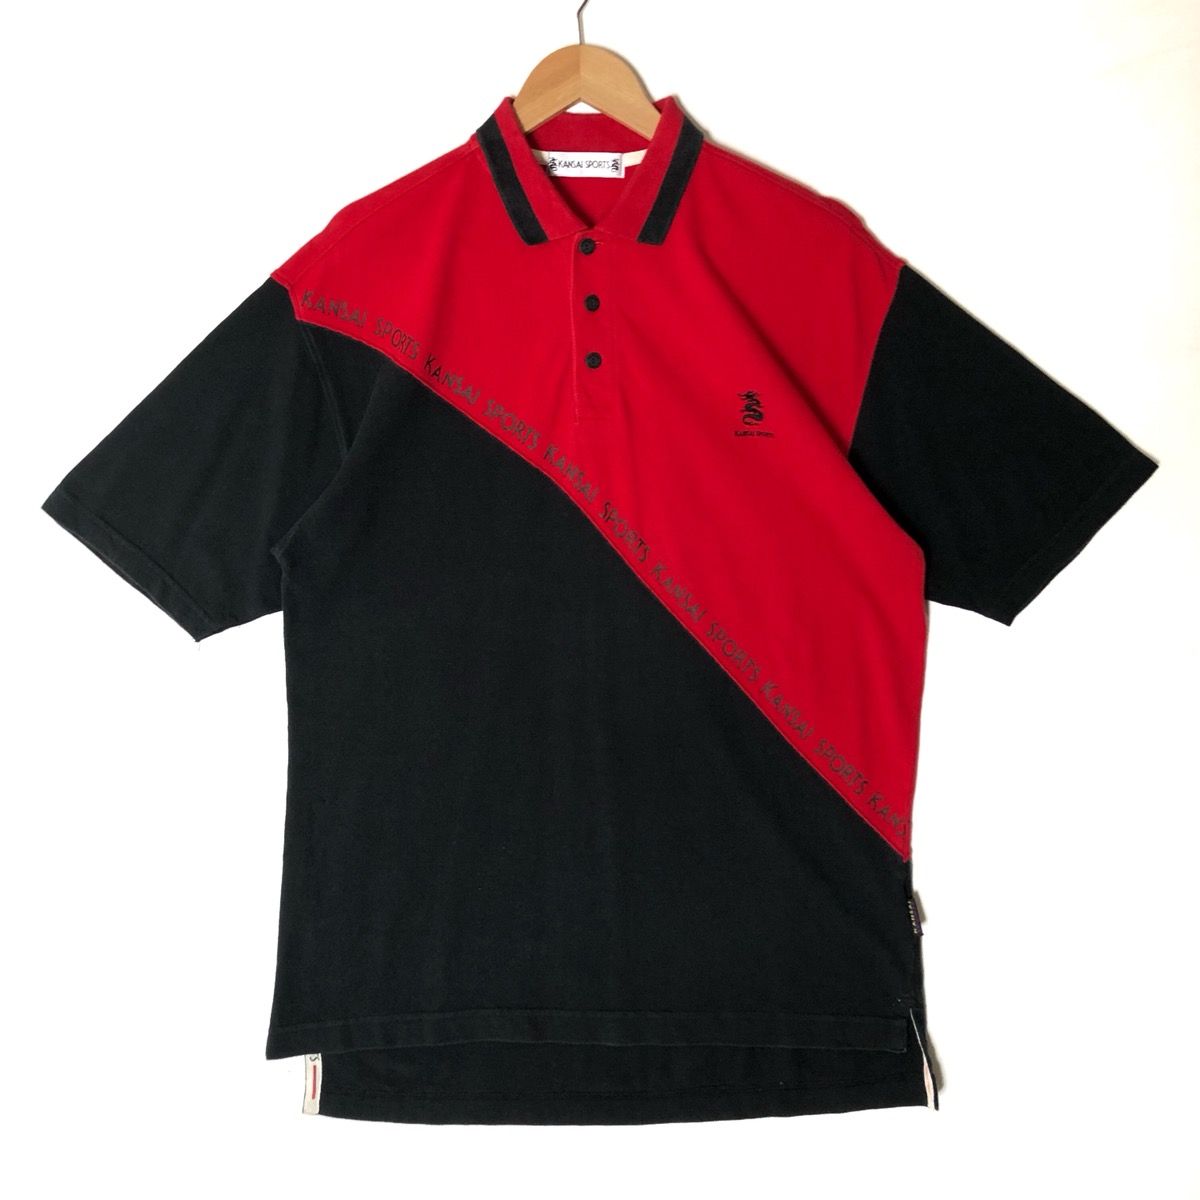 Japanese Brand Kansai Yamamoto Kansai Sports Polo Shirt Size US M / EU 48-50 / 2 - 1 Preview